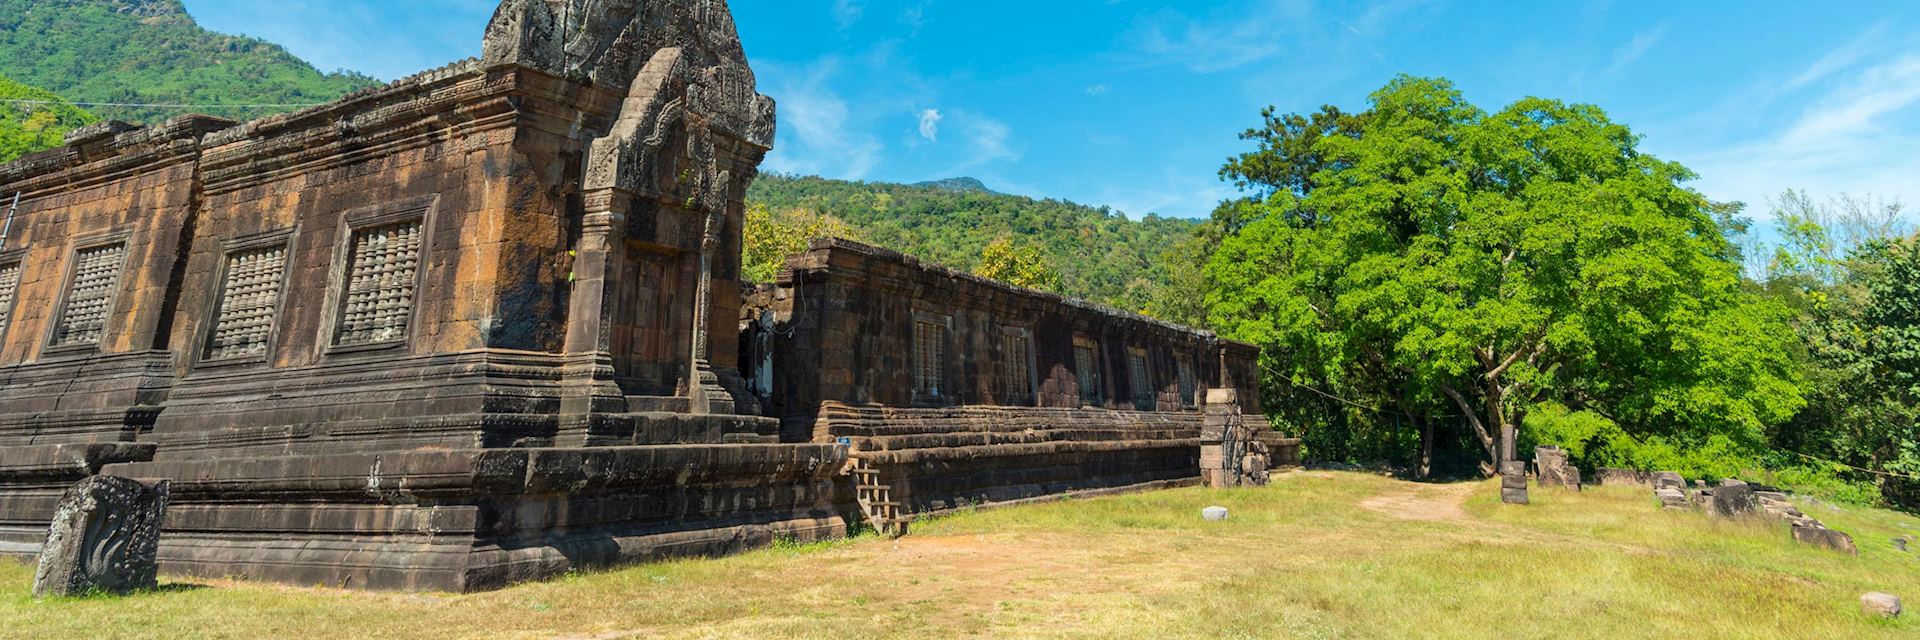 Wat Phou, Champasak